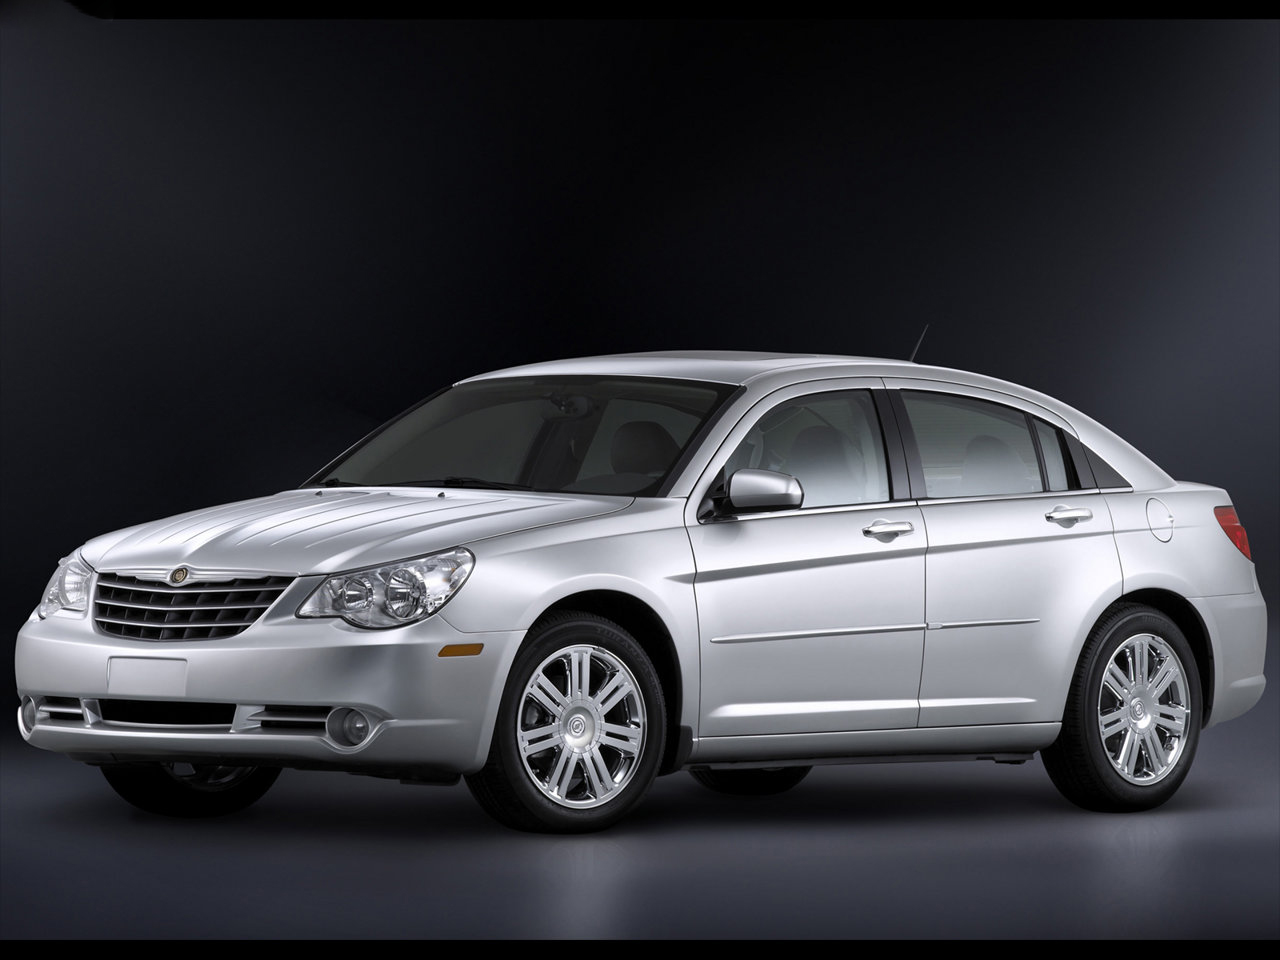 Chrysler Sebring testy i recenzje, zdjęcia, opinie, dane